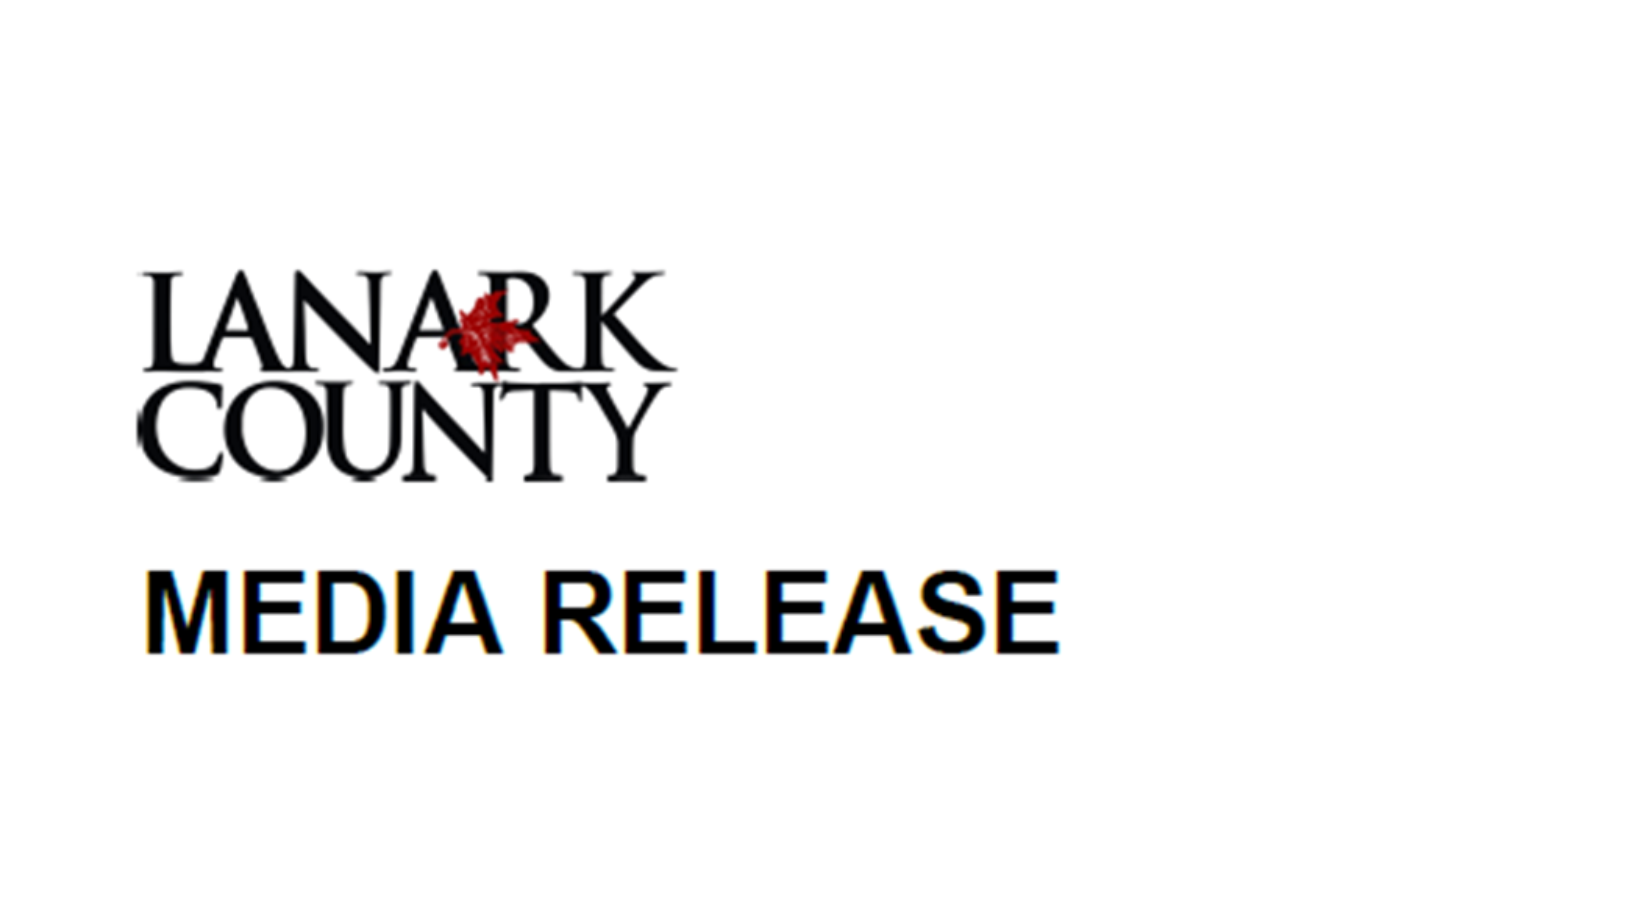 Media Release, Lanark County